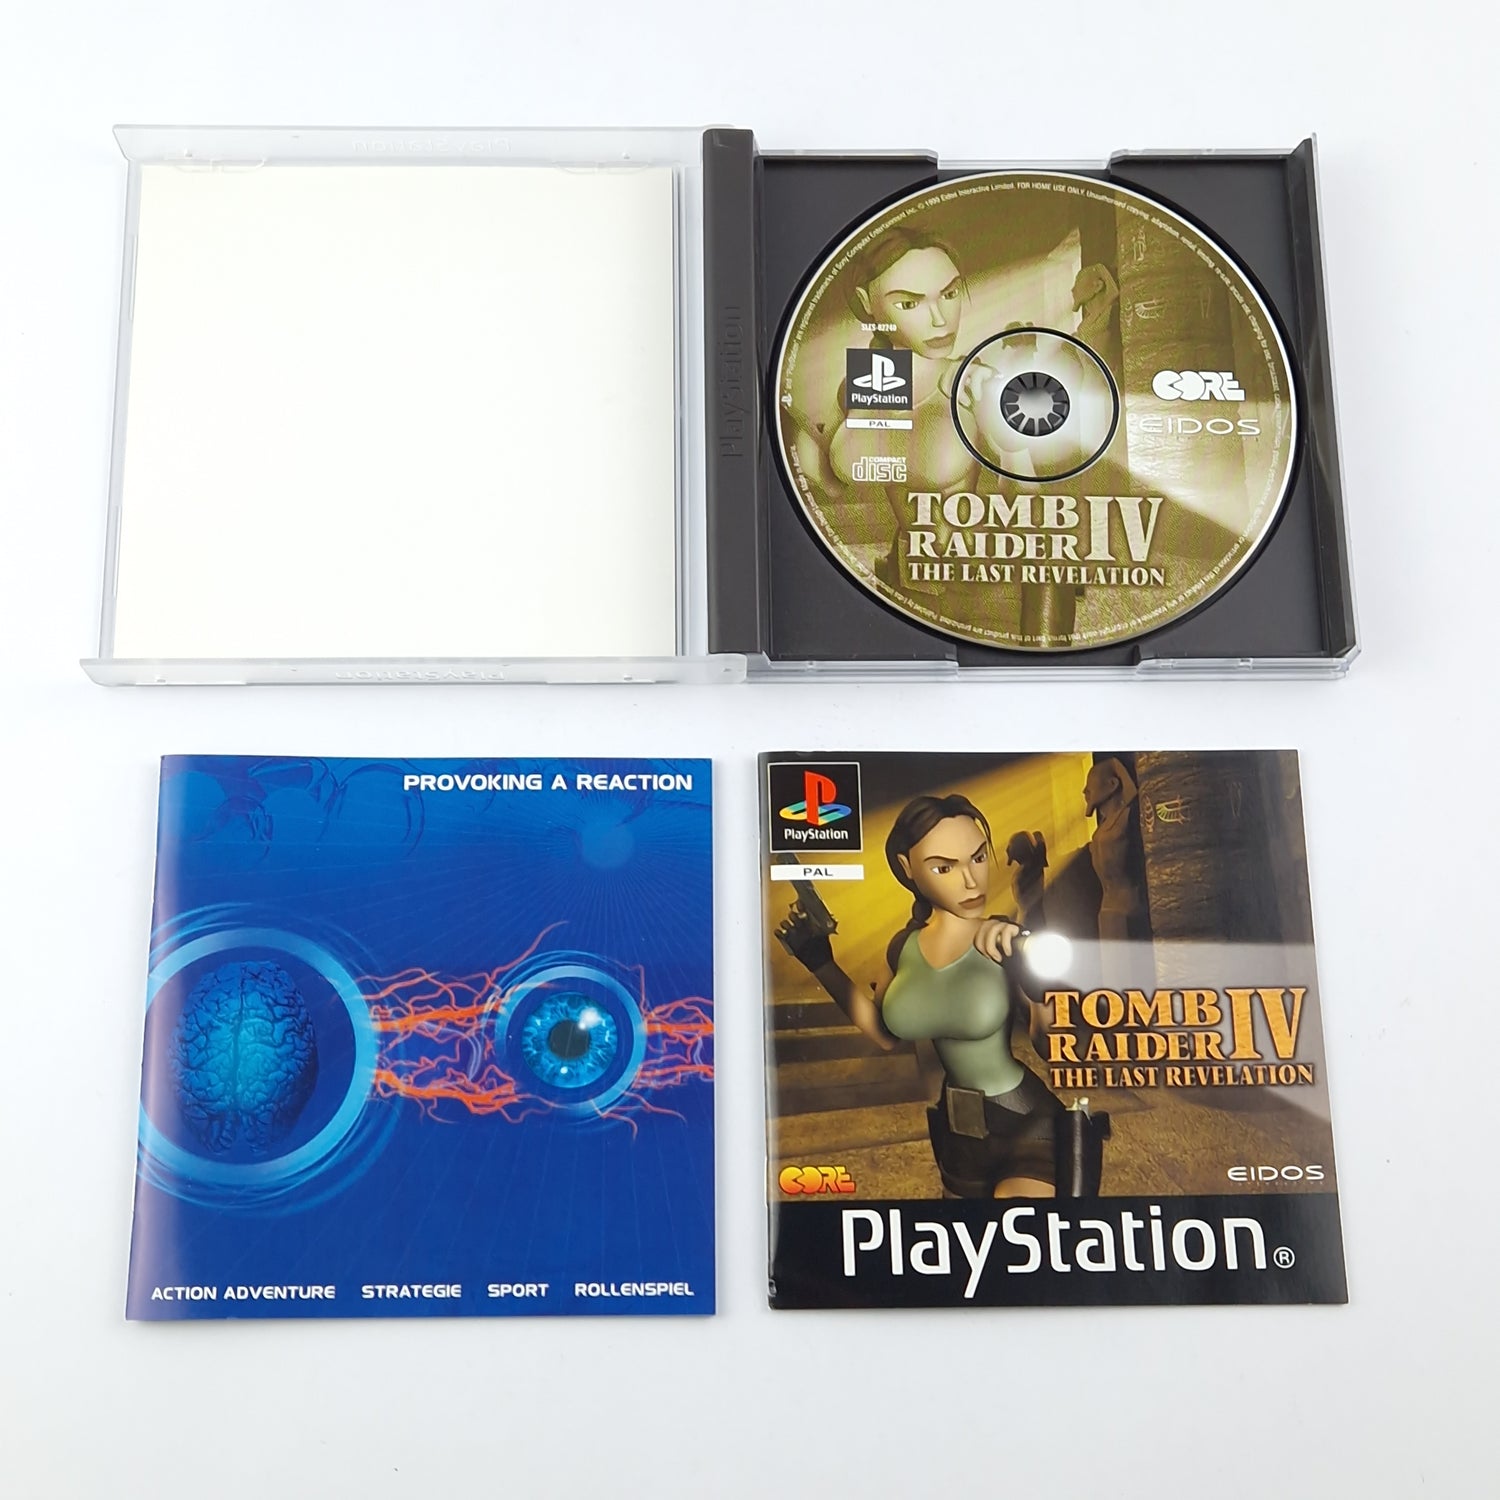 Playstation 1 Games Bundle: Tomb Raider III & IV in SET - PS1 OVP Lara Croft